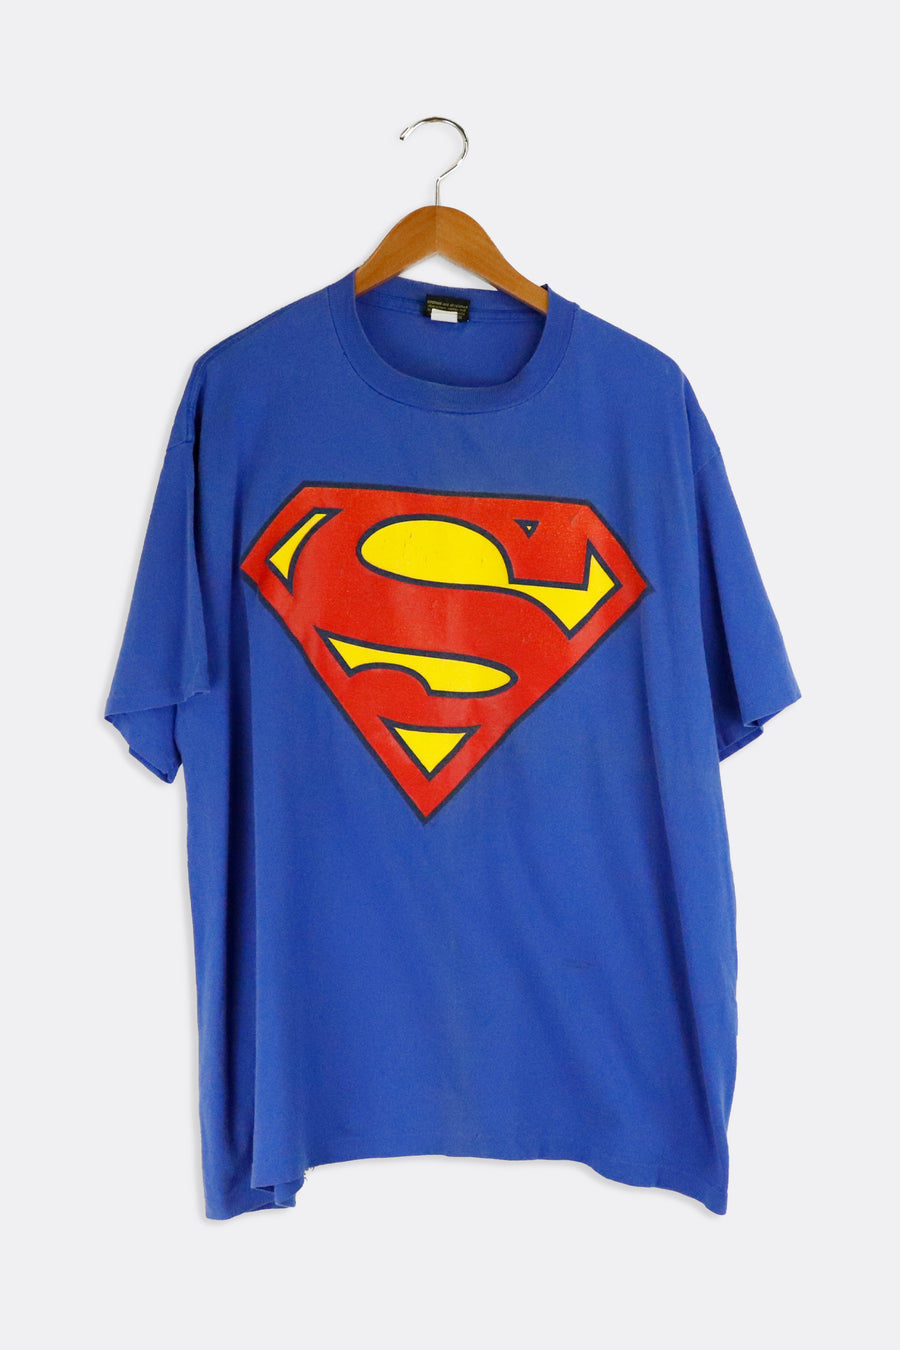 Vintage 2000 Super Man Vinyl Logo Graphic T Shirt Sz XL